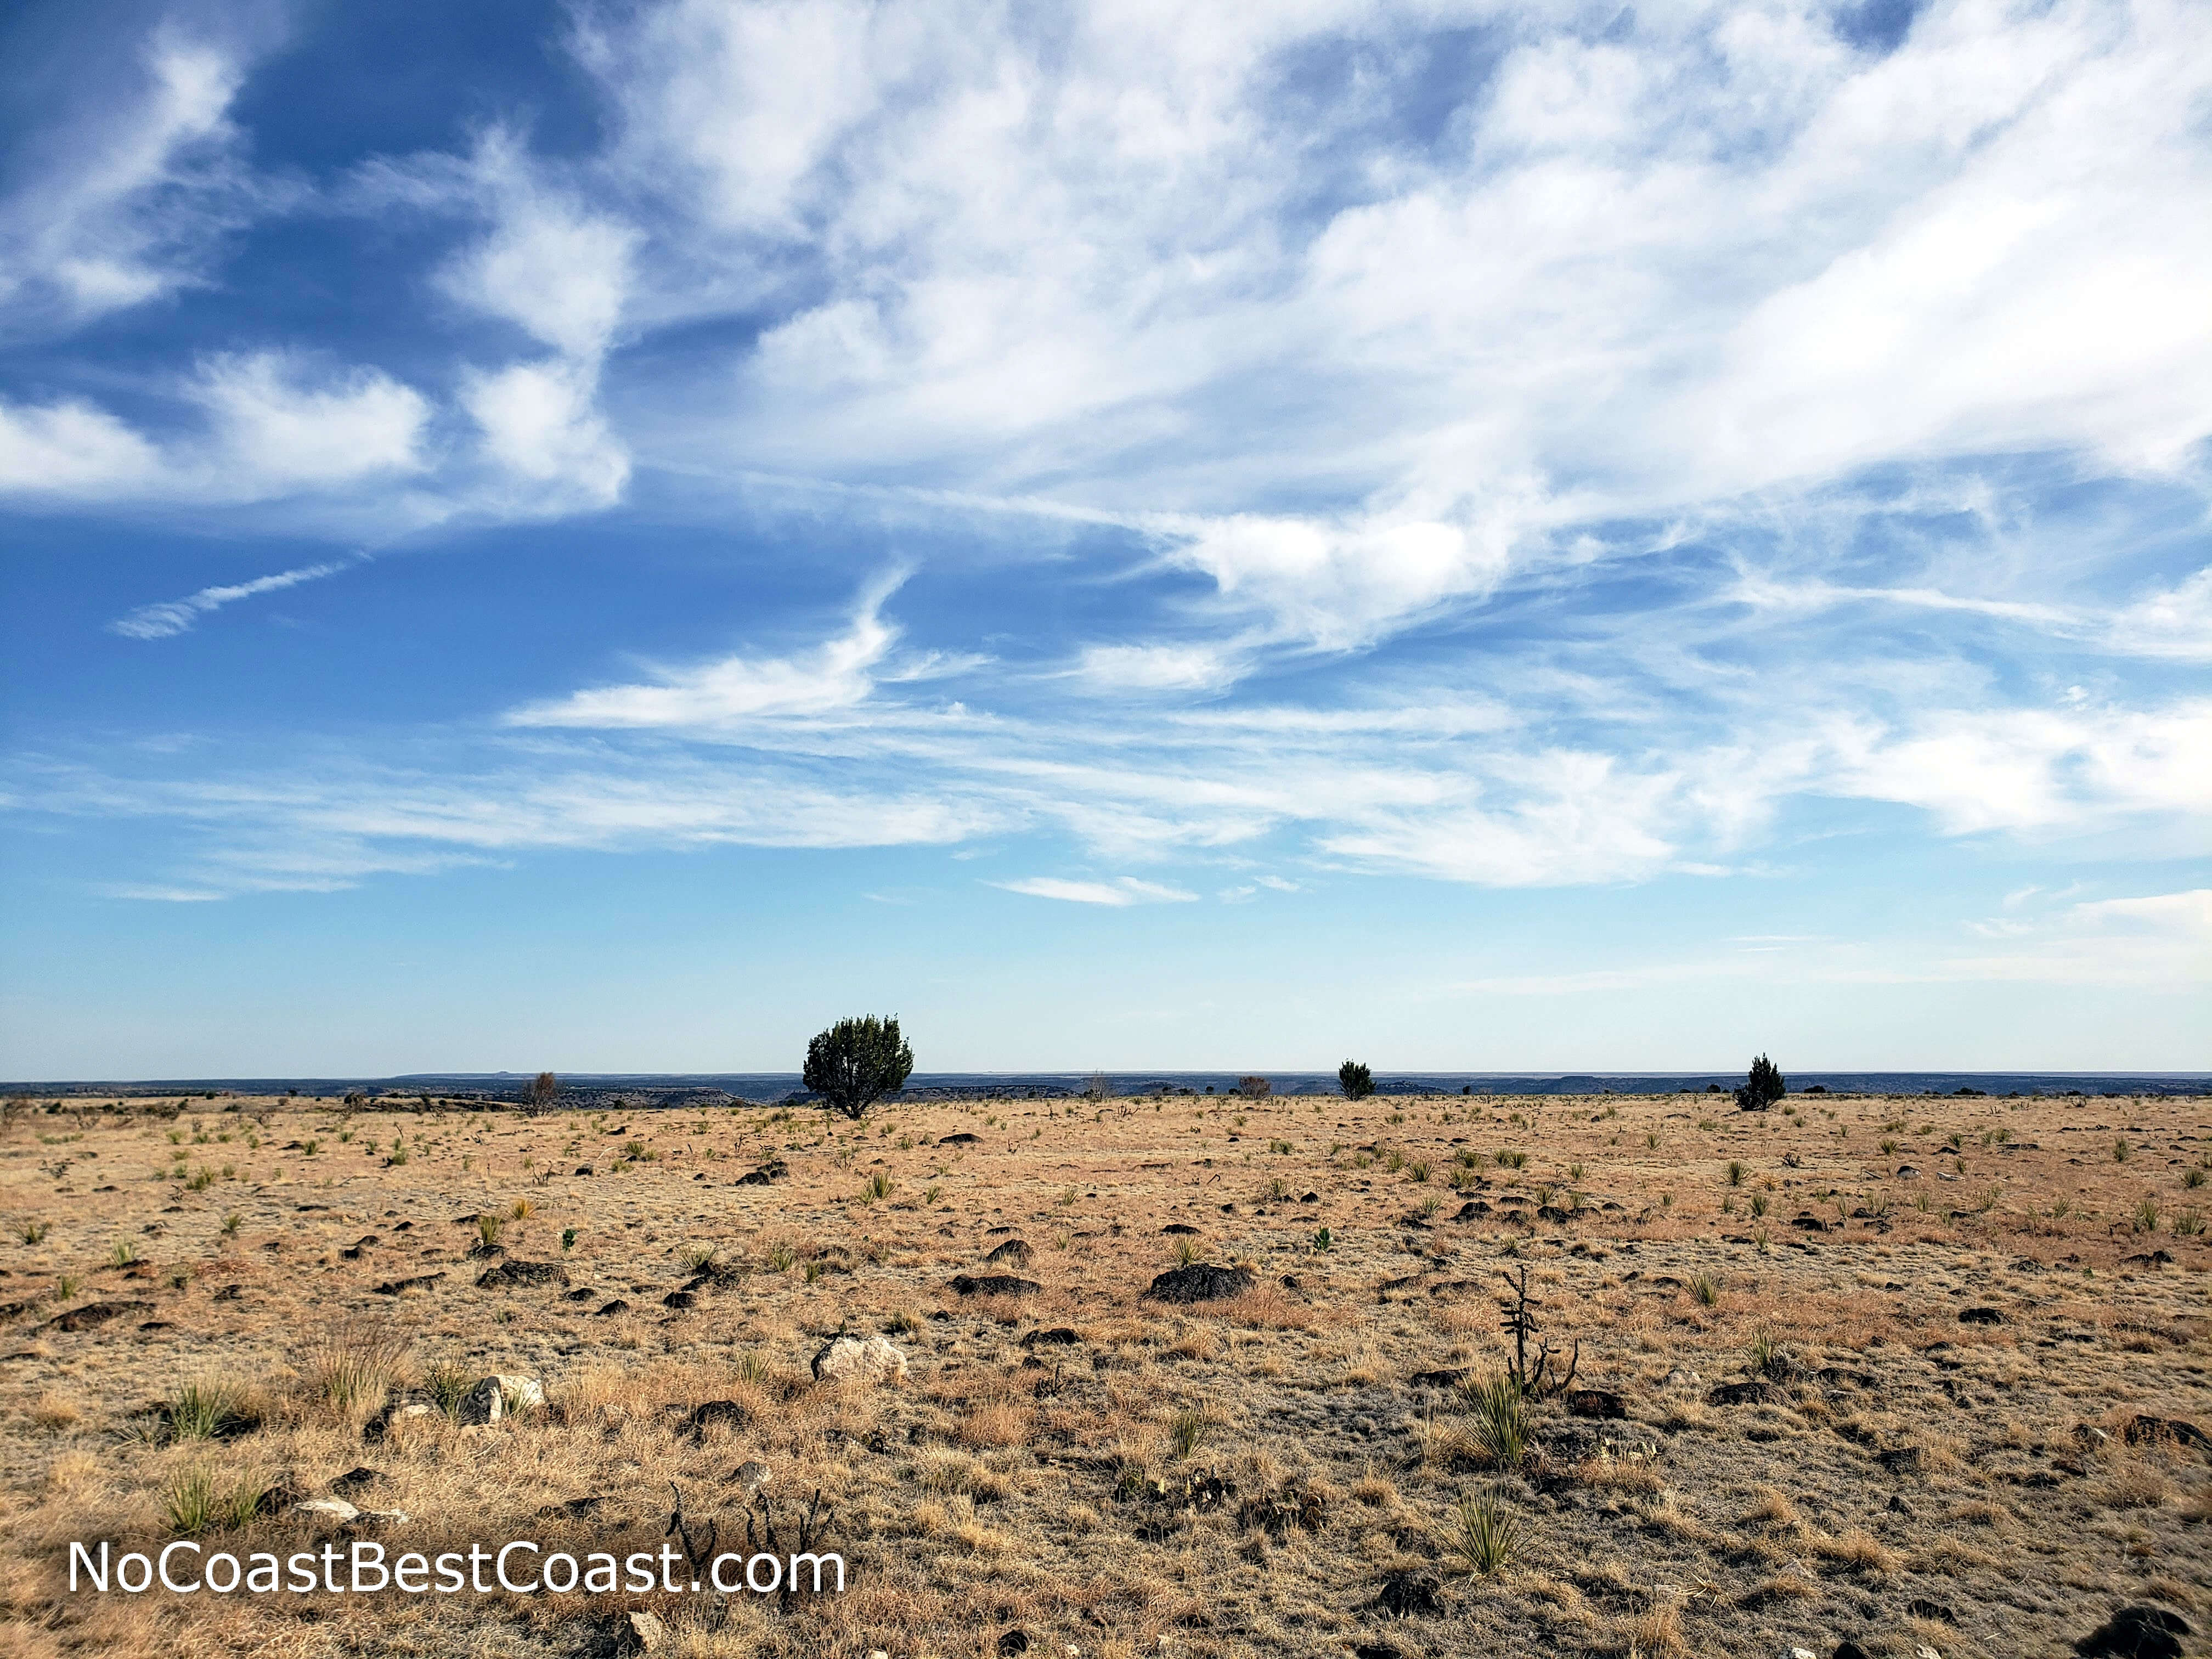 The flat, arid environment on top of Black Mesa